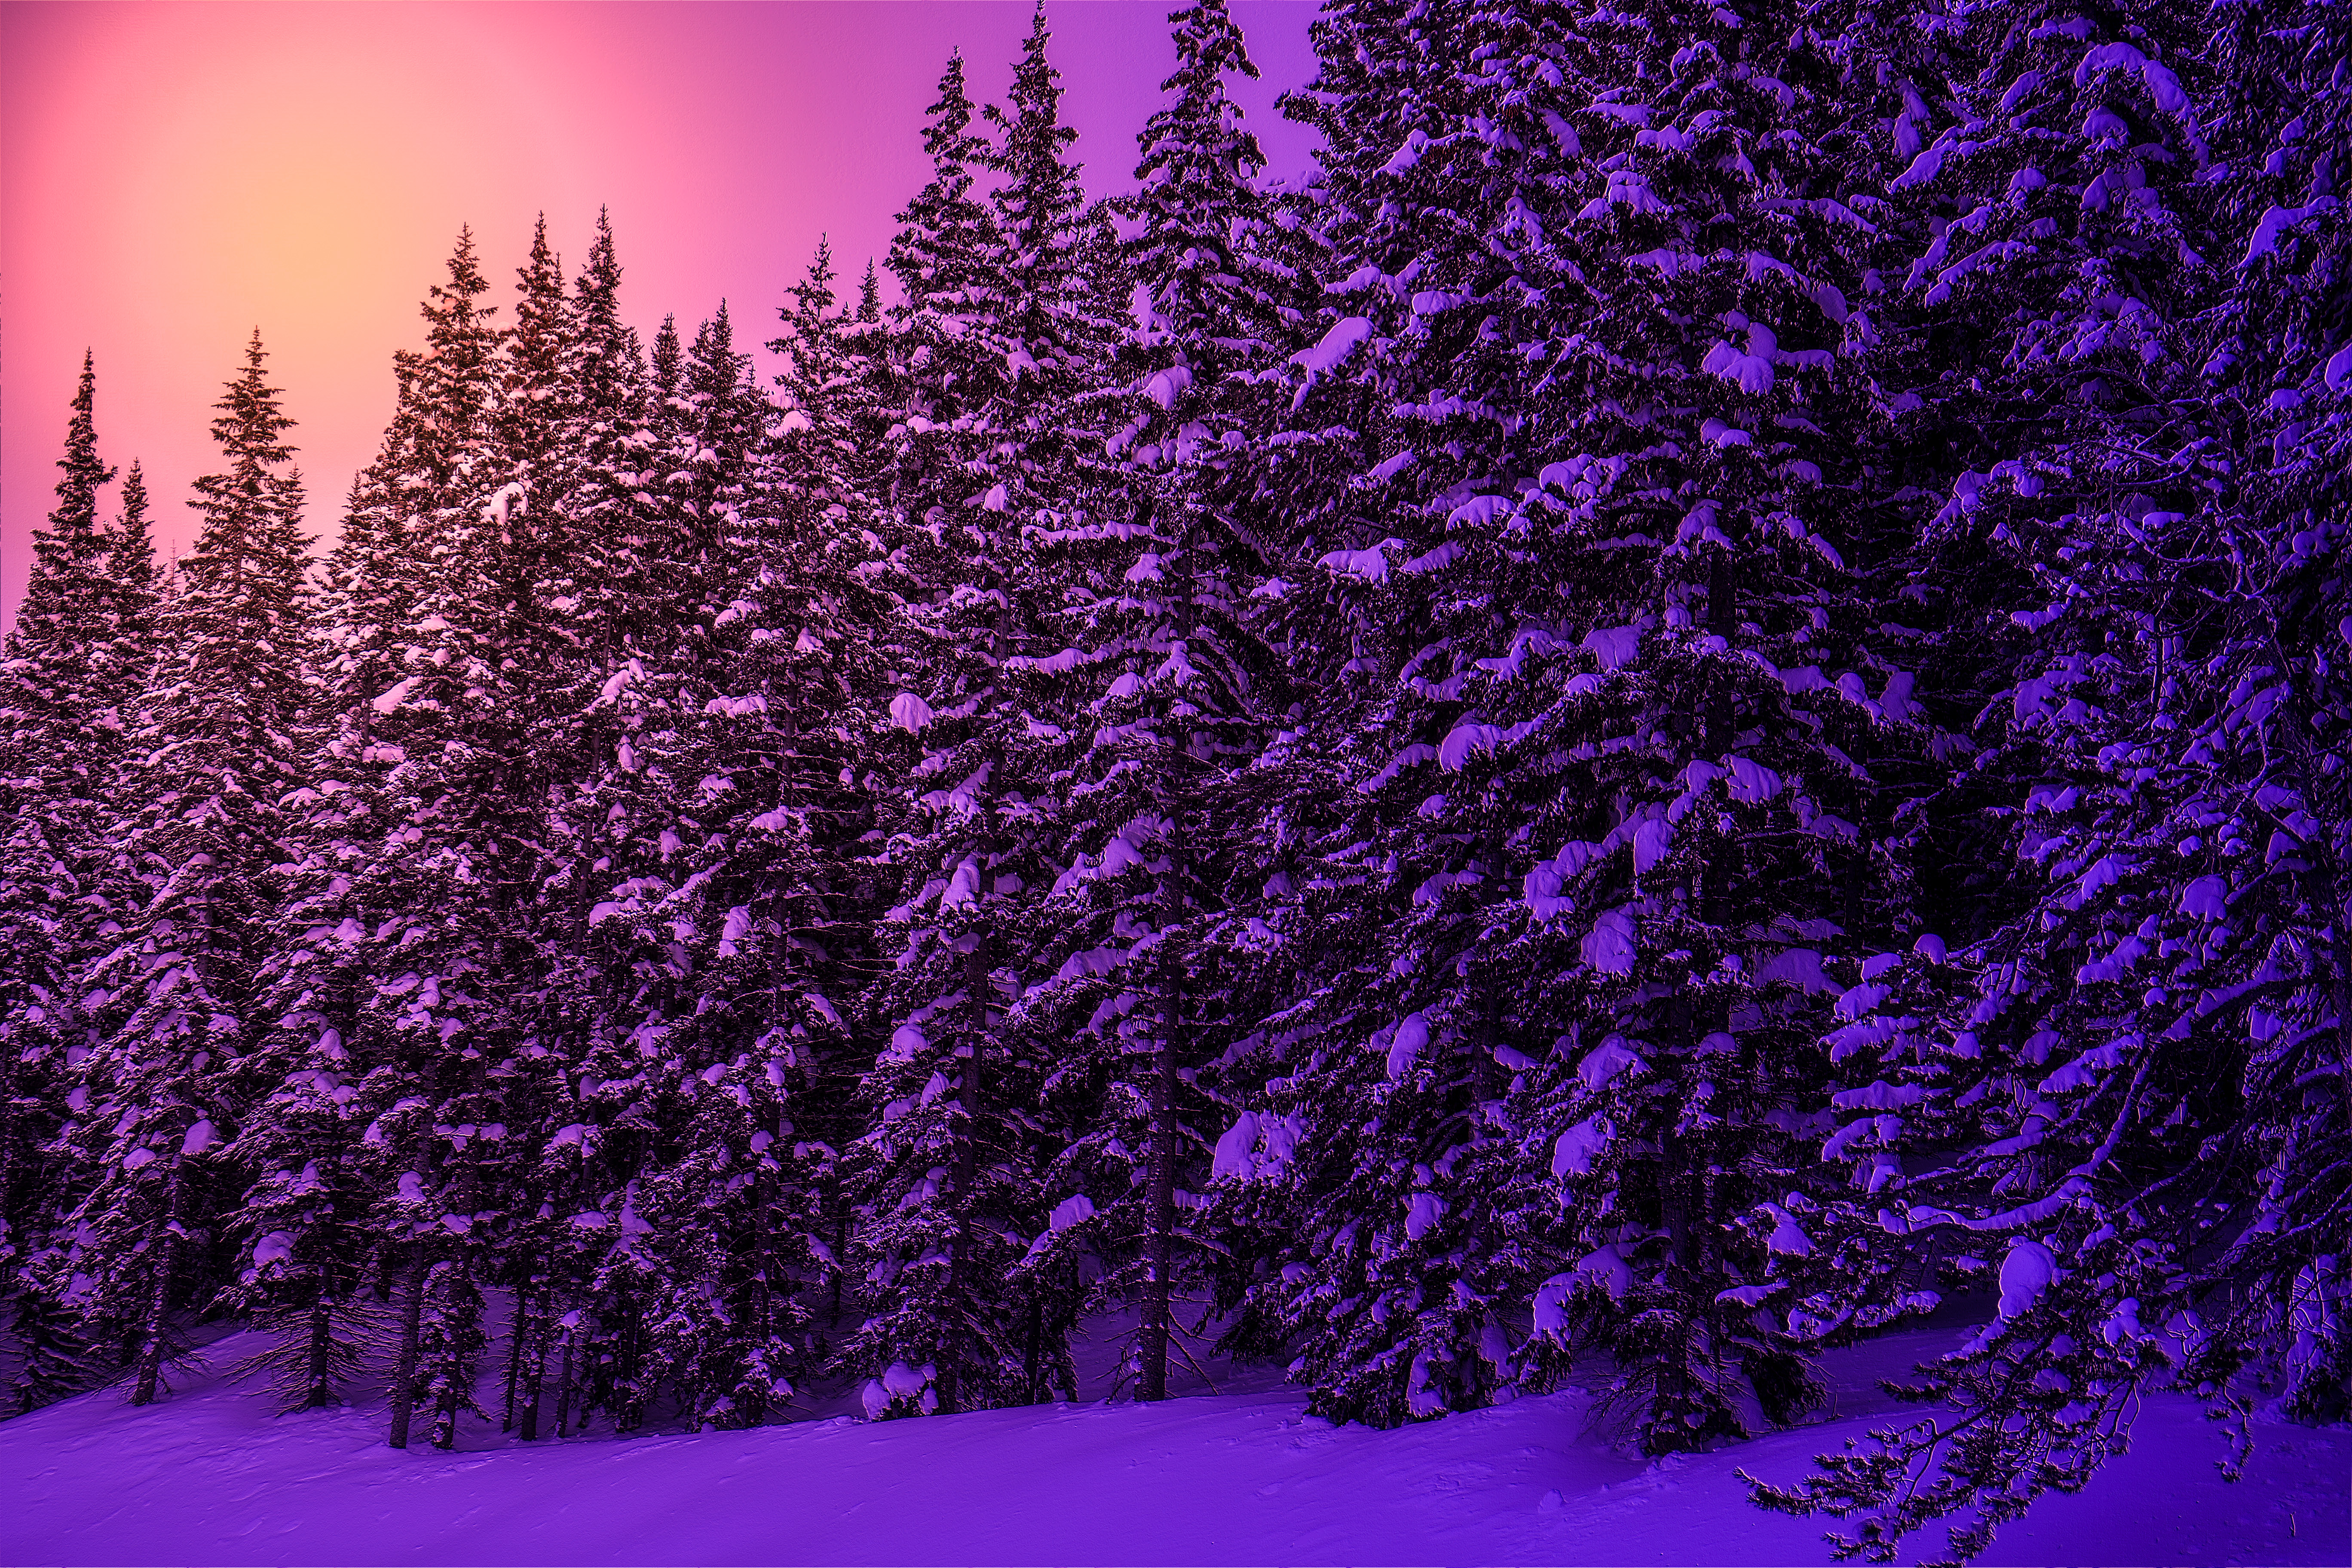 1526667 descargar imagen tierra/naturaleza, invierno, bosque, pino, púrpura, nieve, atardecer, árbol: fondos de pantalla y protectores de pantalla gratis